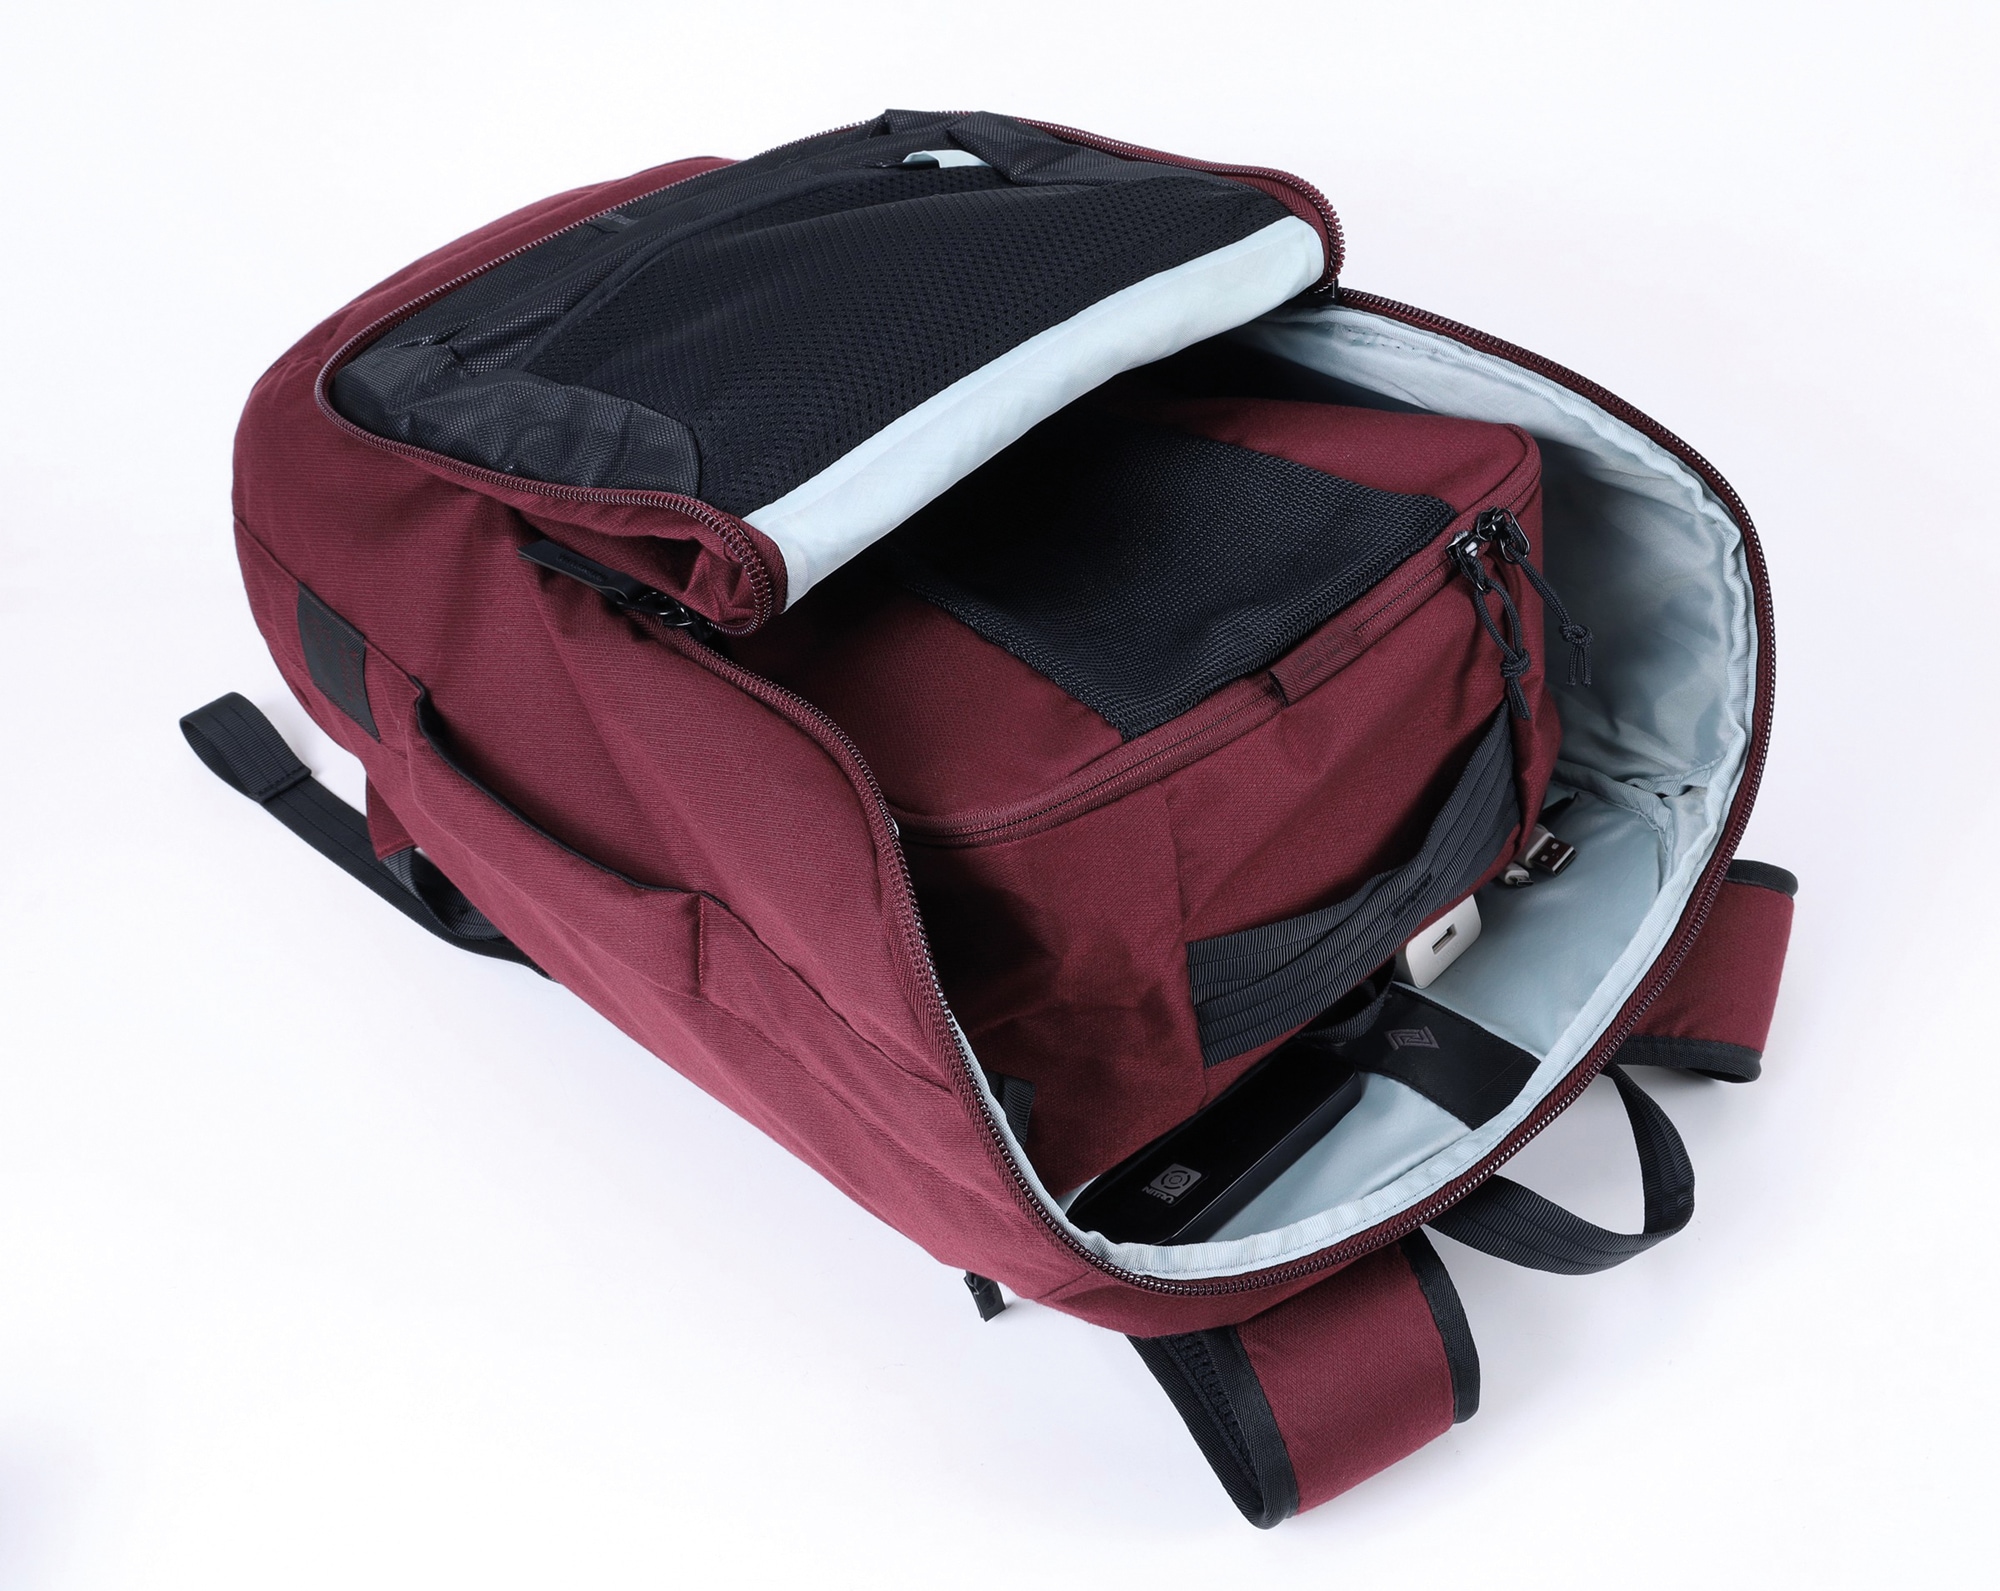 NITRO Freizeitrucksack »Nikuro Traveler«, Reisetasche, Travel Bag, Alltagsrucksack, Daypack